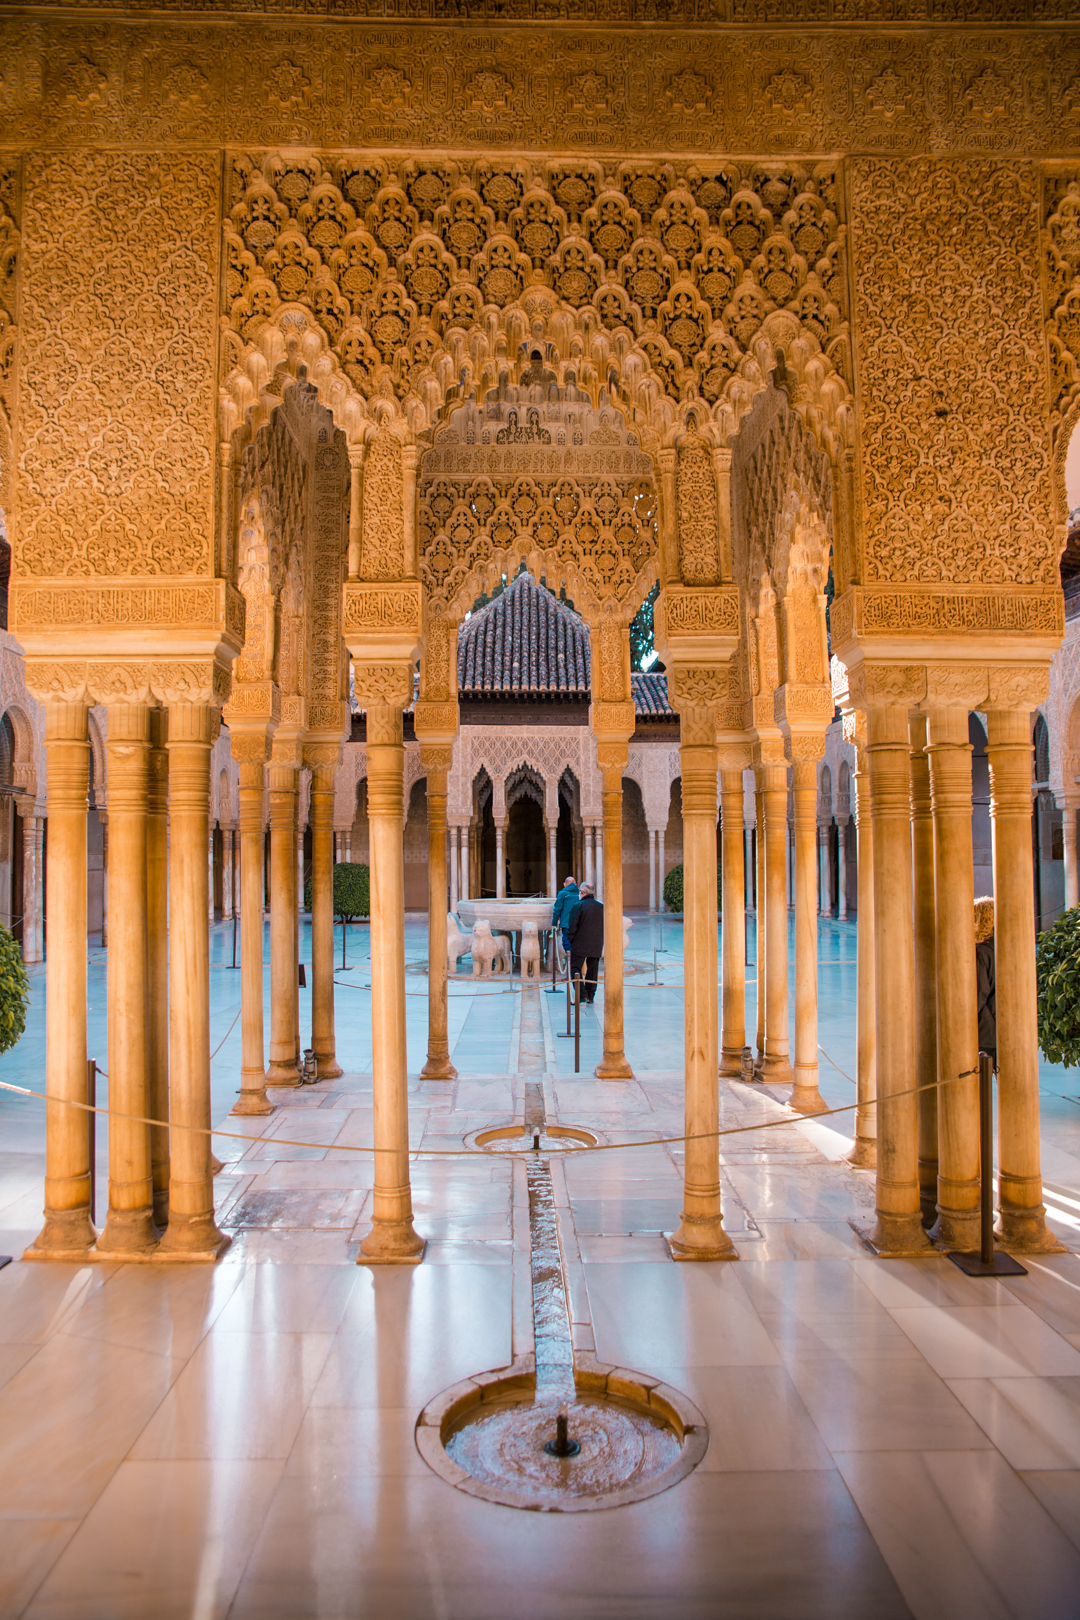 The Court of the Lions (Patio de los Leones) in Nasrid Palace, Alhambra, Granada.